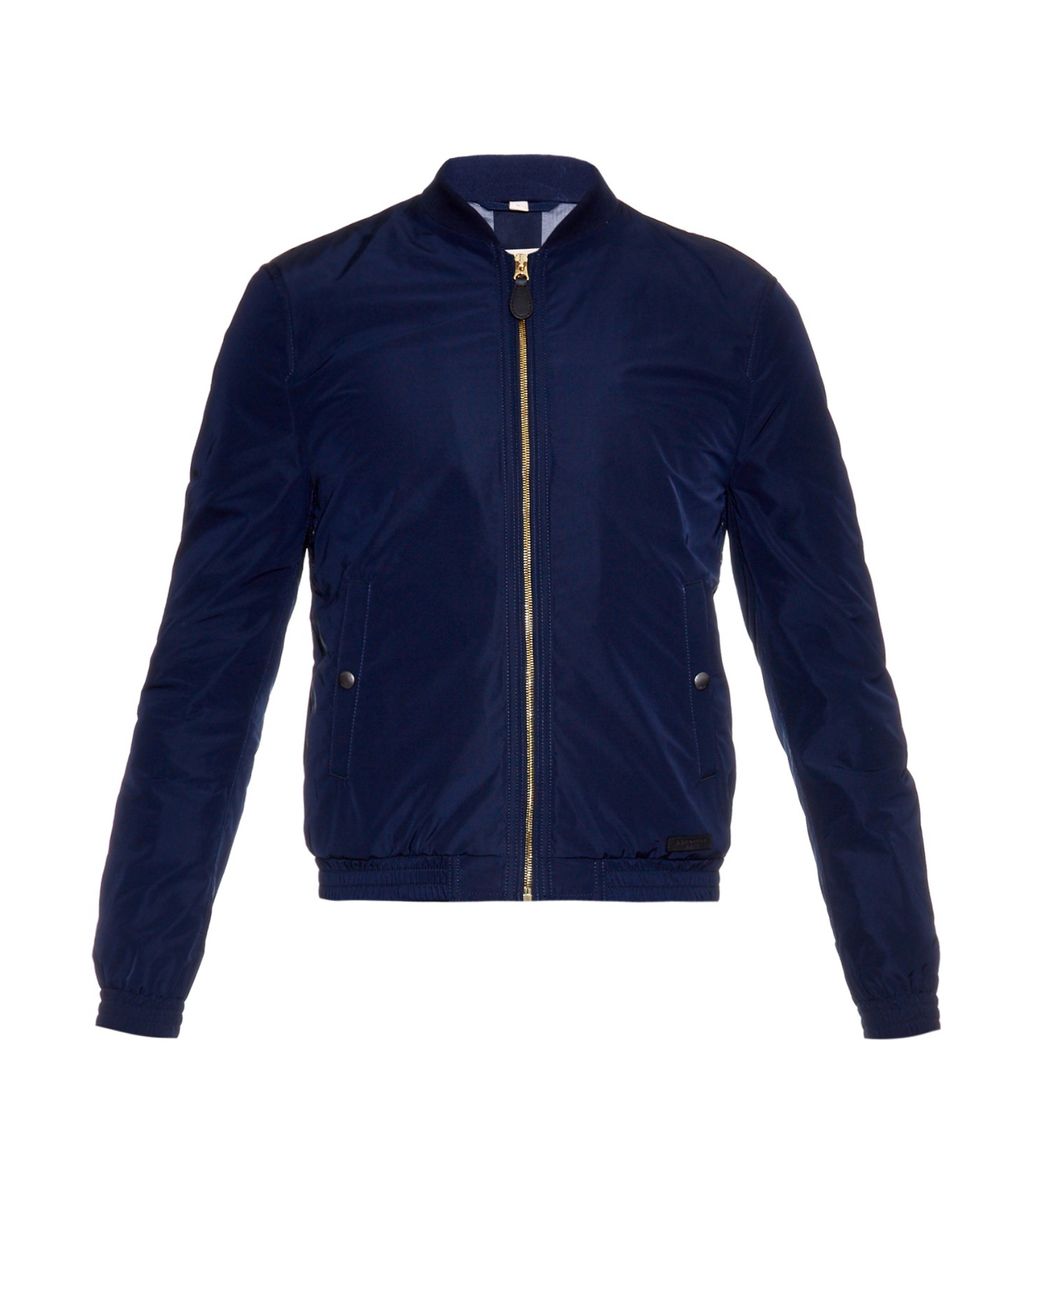 Aprender acerca 62+ imagen burberry harrington jacket blue - Viaterra.mx